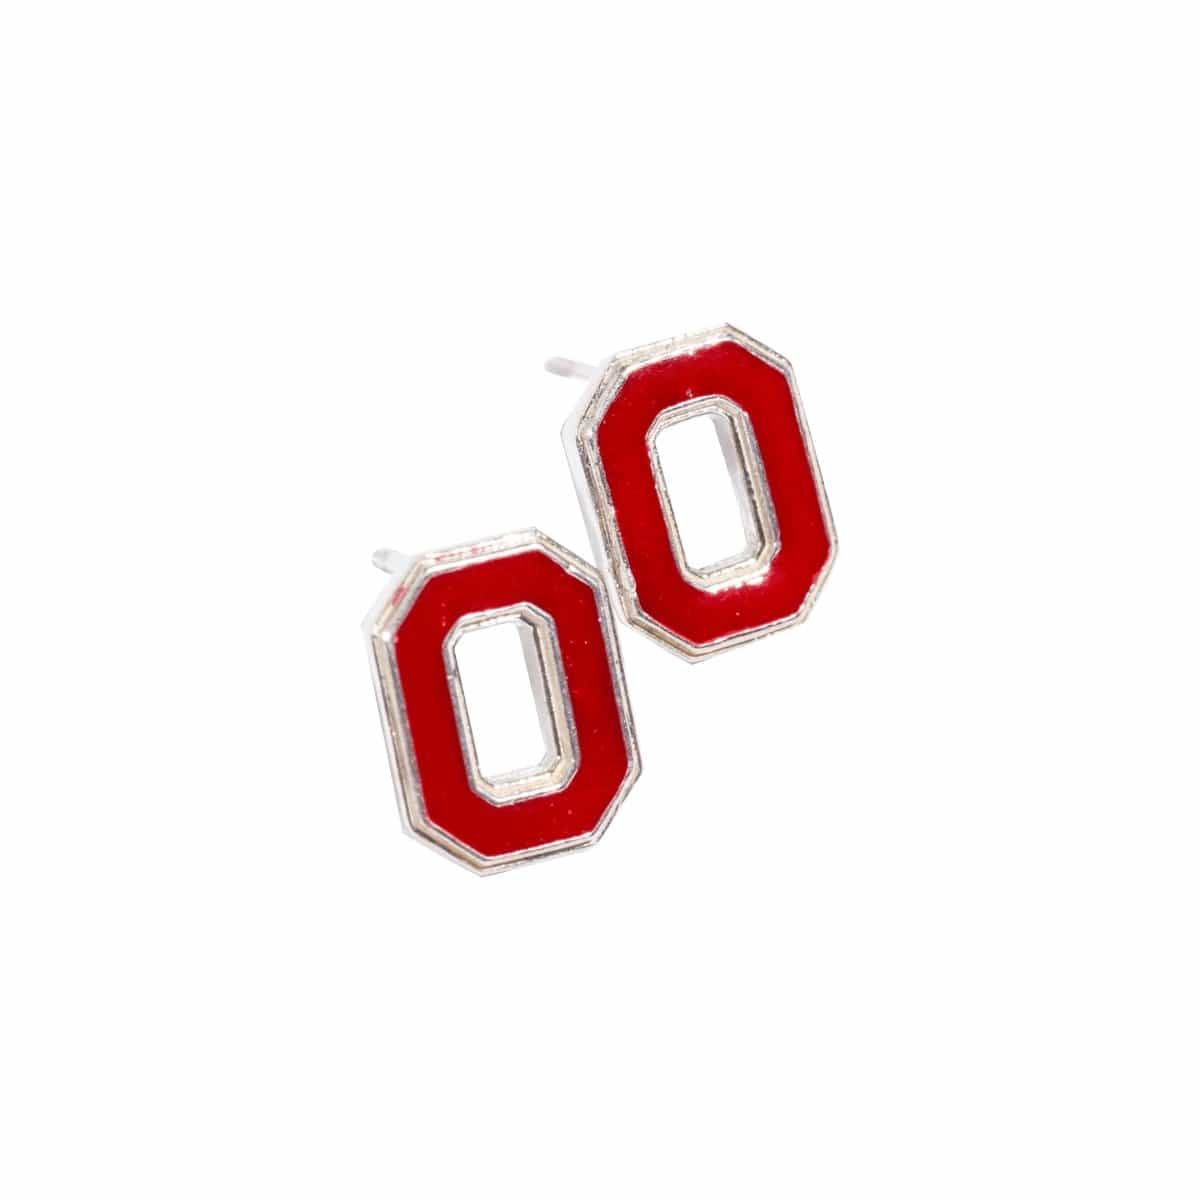 Ohio State Earrings in Silver OSU Block O Stud Earrings Ohio State